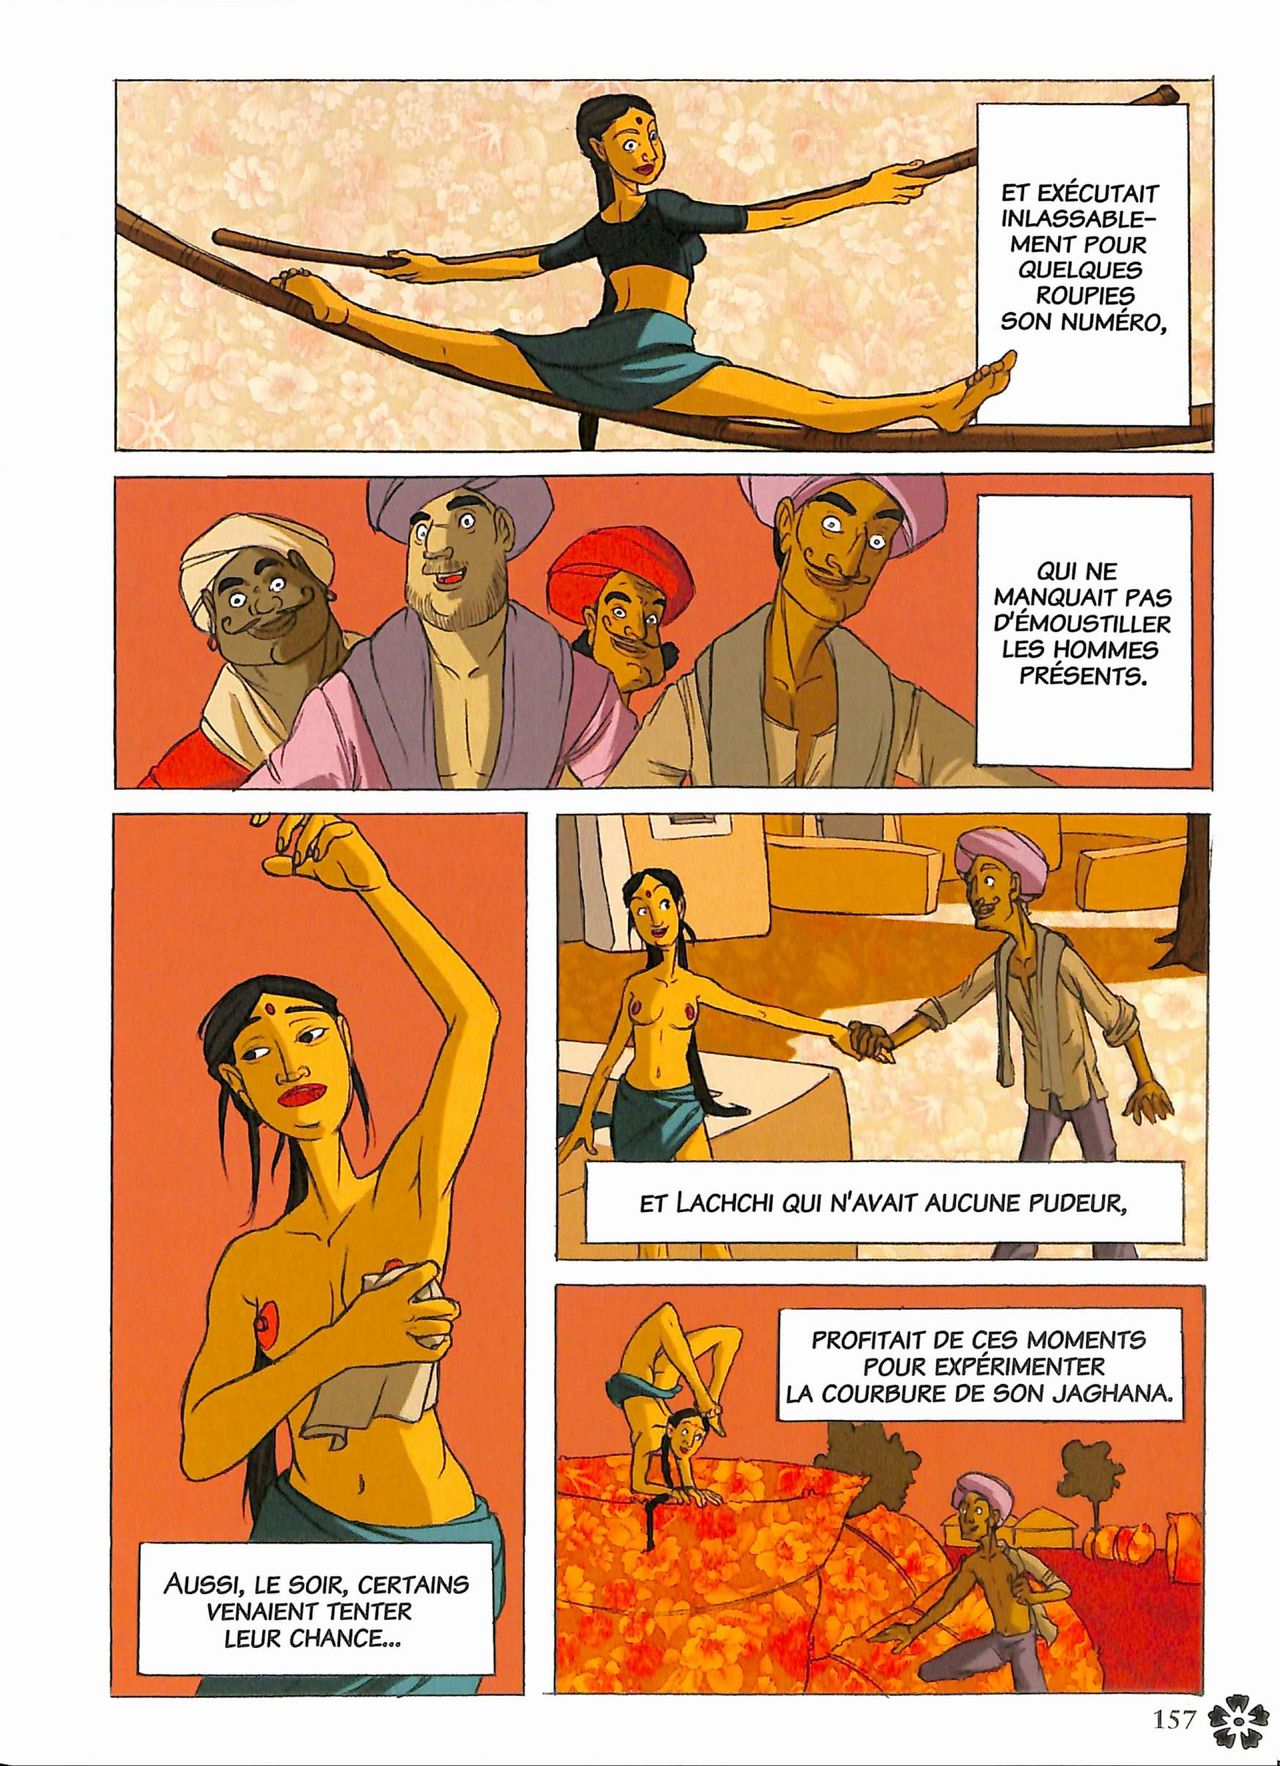 Kama Sutra en bandes dessinées - Kama Sutra with Comics numero d'image 157